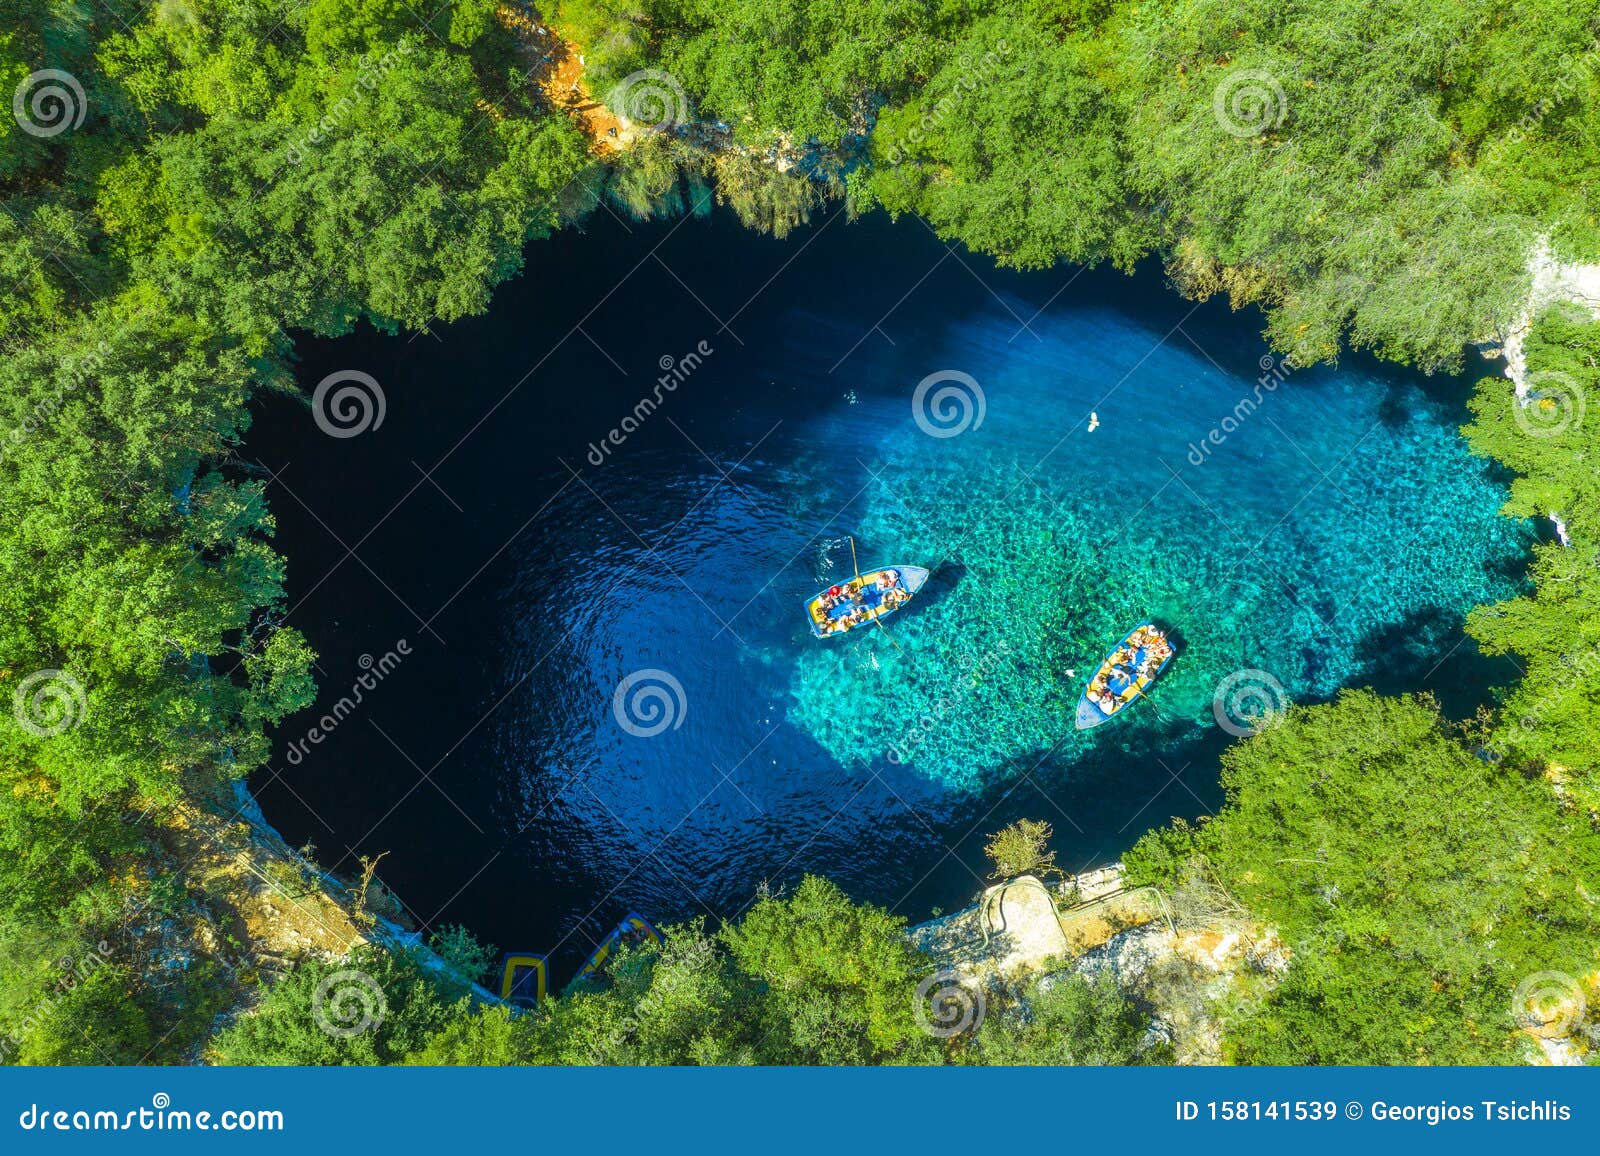 famous melissani lake on kefalonia island, greece.